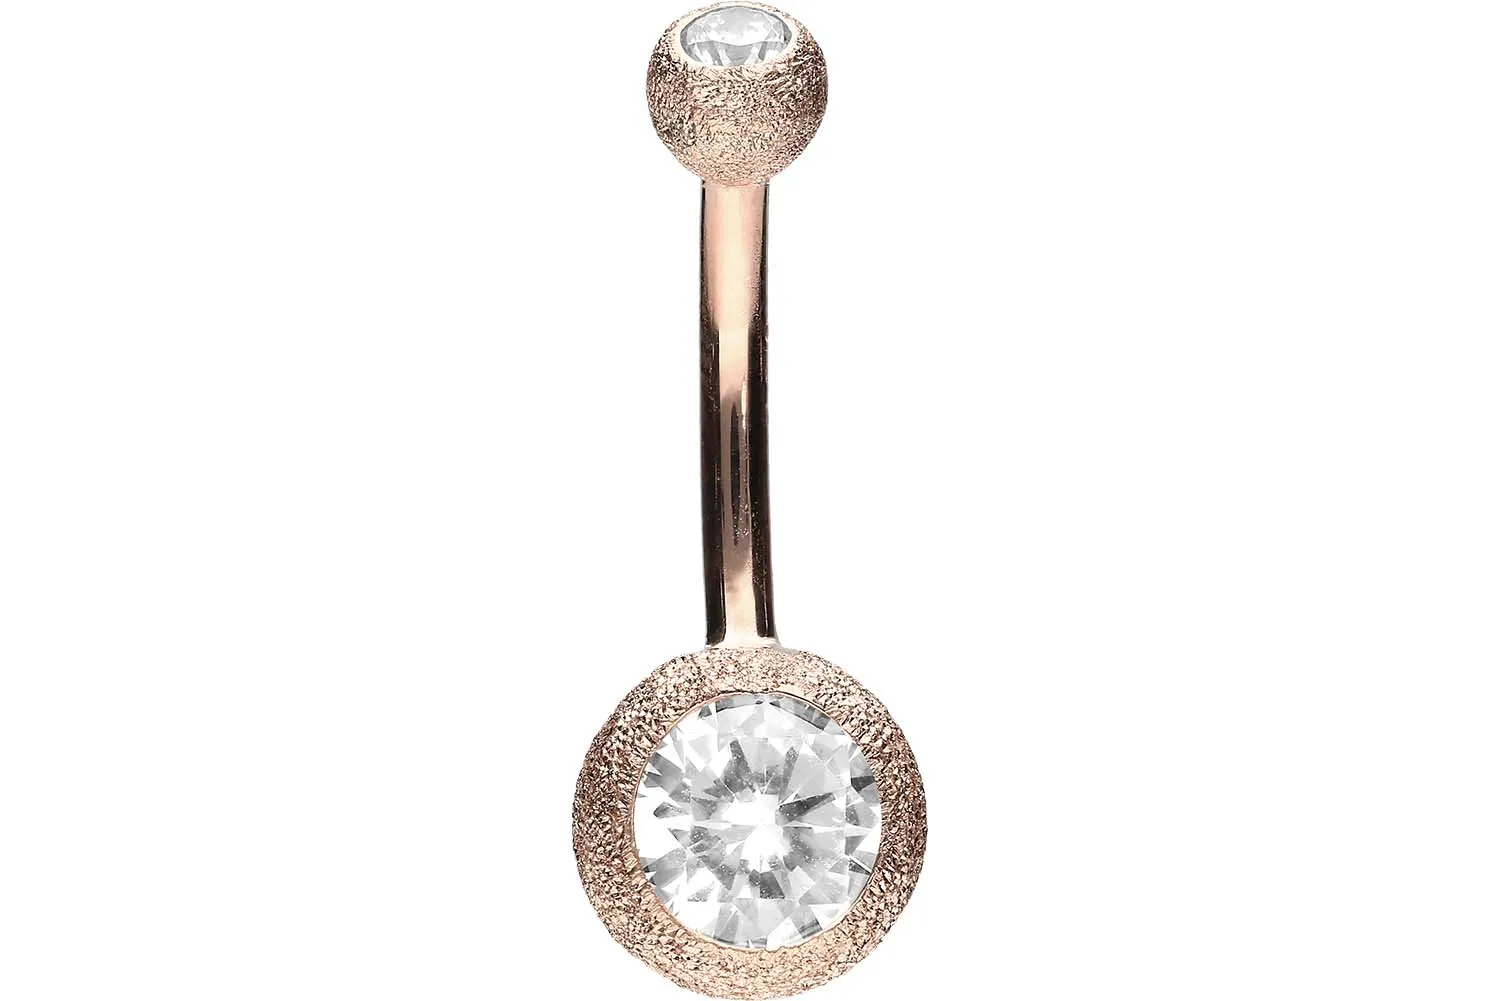 Bauchnabelpiercing 18karat Echtgold Roségold Diamantoptik mit zwei Kristallkugeln